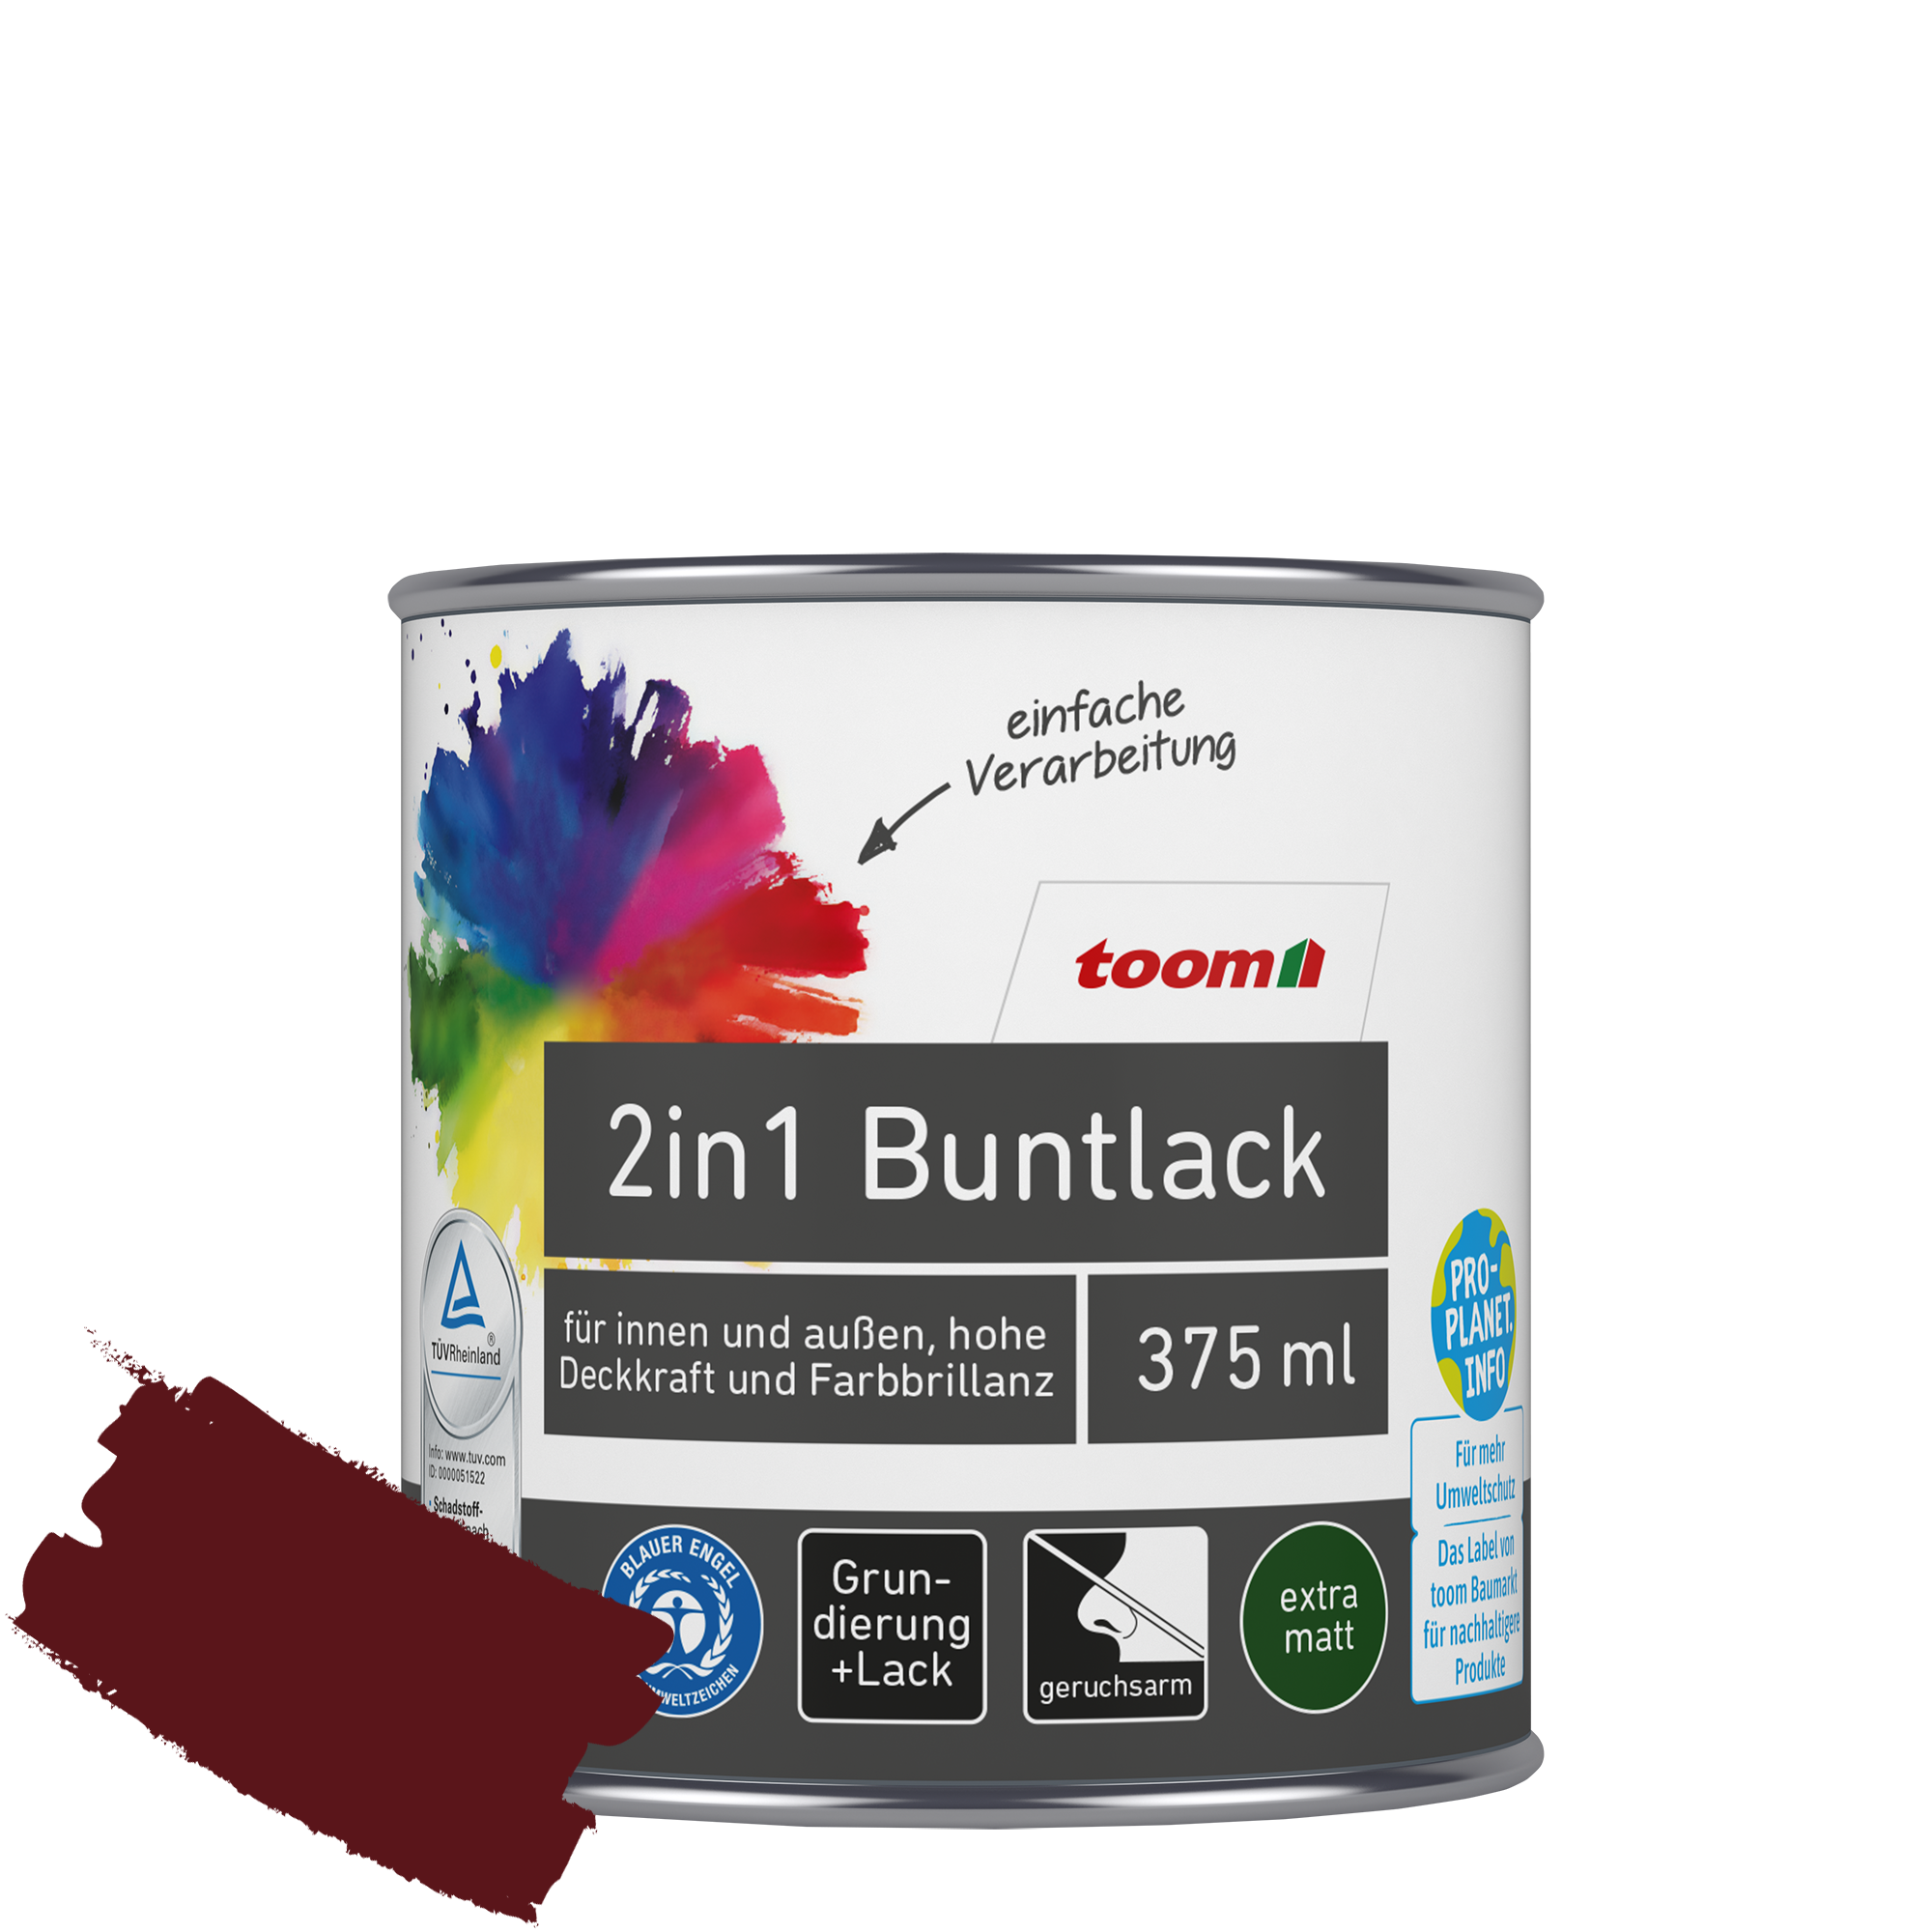 2in1 Buntlack 'Abendrot' purpurrot matt 375 ml + product picture